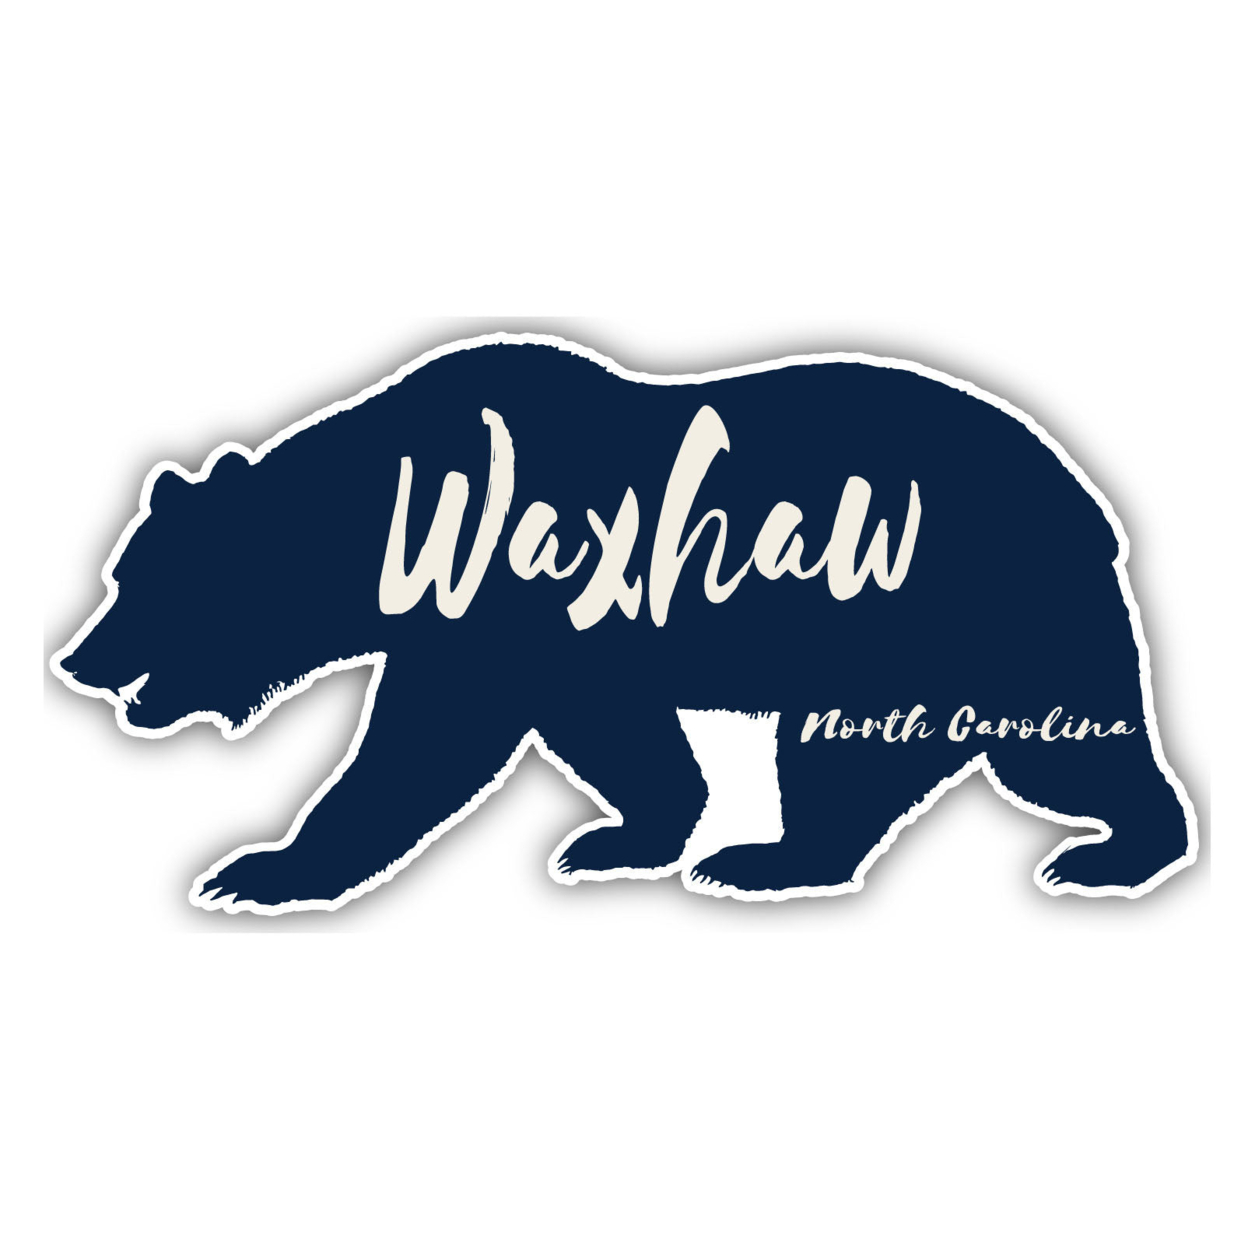 Waxhaw North Carolina Souvenir Decorative Stickers (Choose Theme And Size) - Single Unit, 4-Inch, Bear